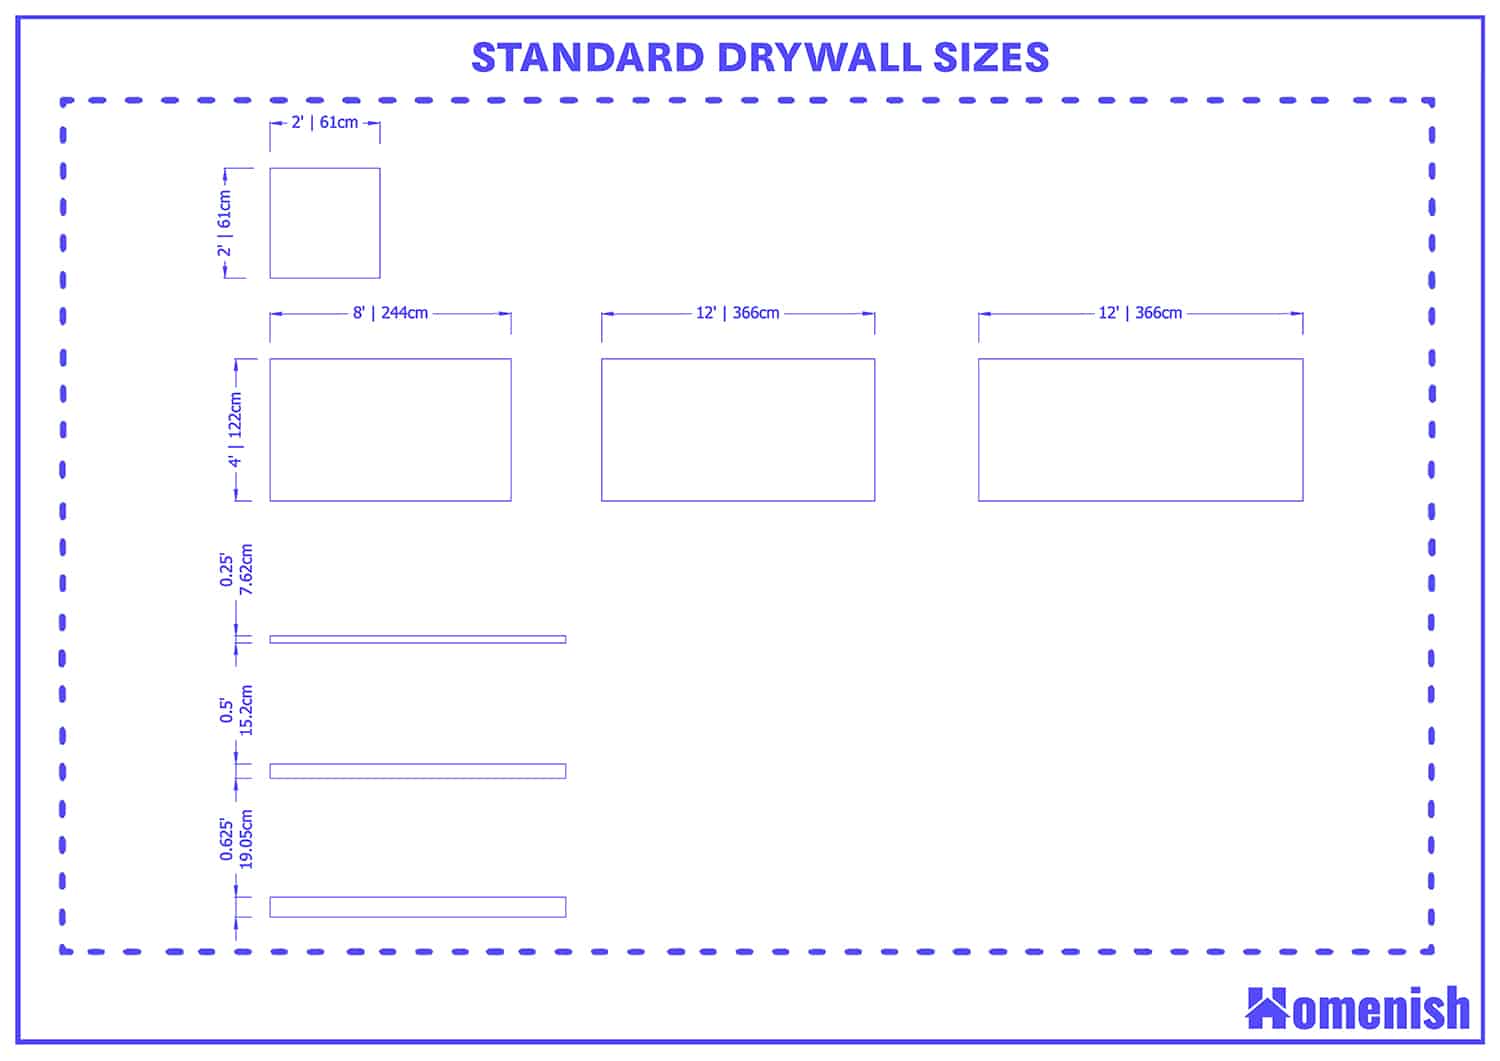 Standard Drywall Sizes